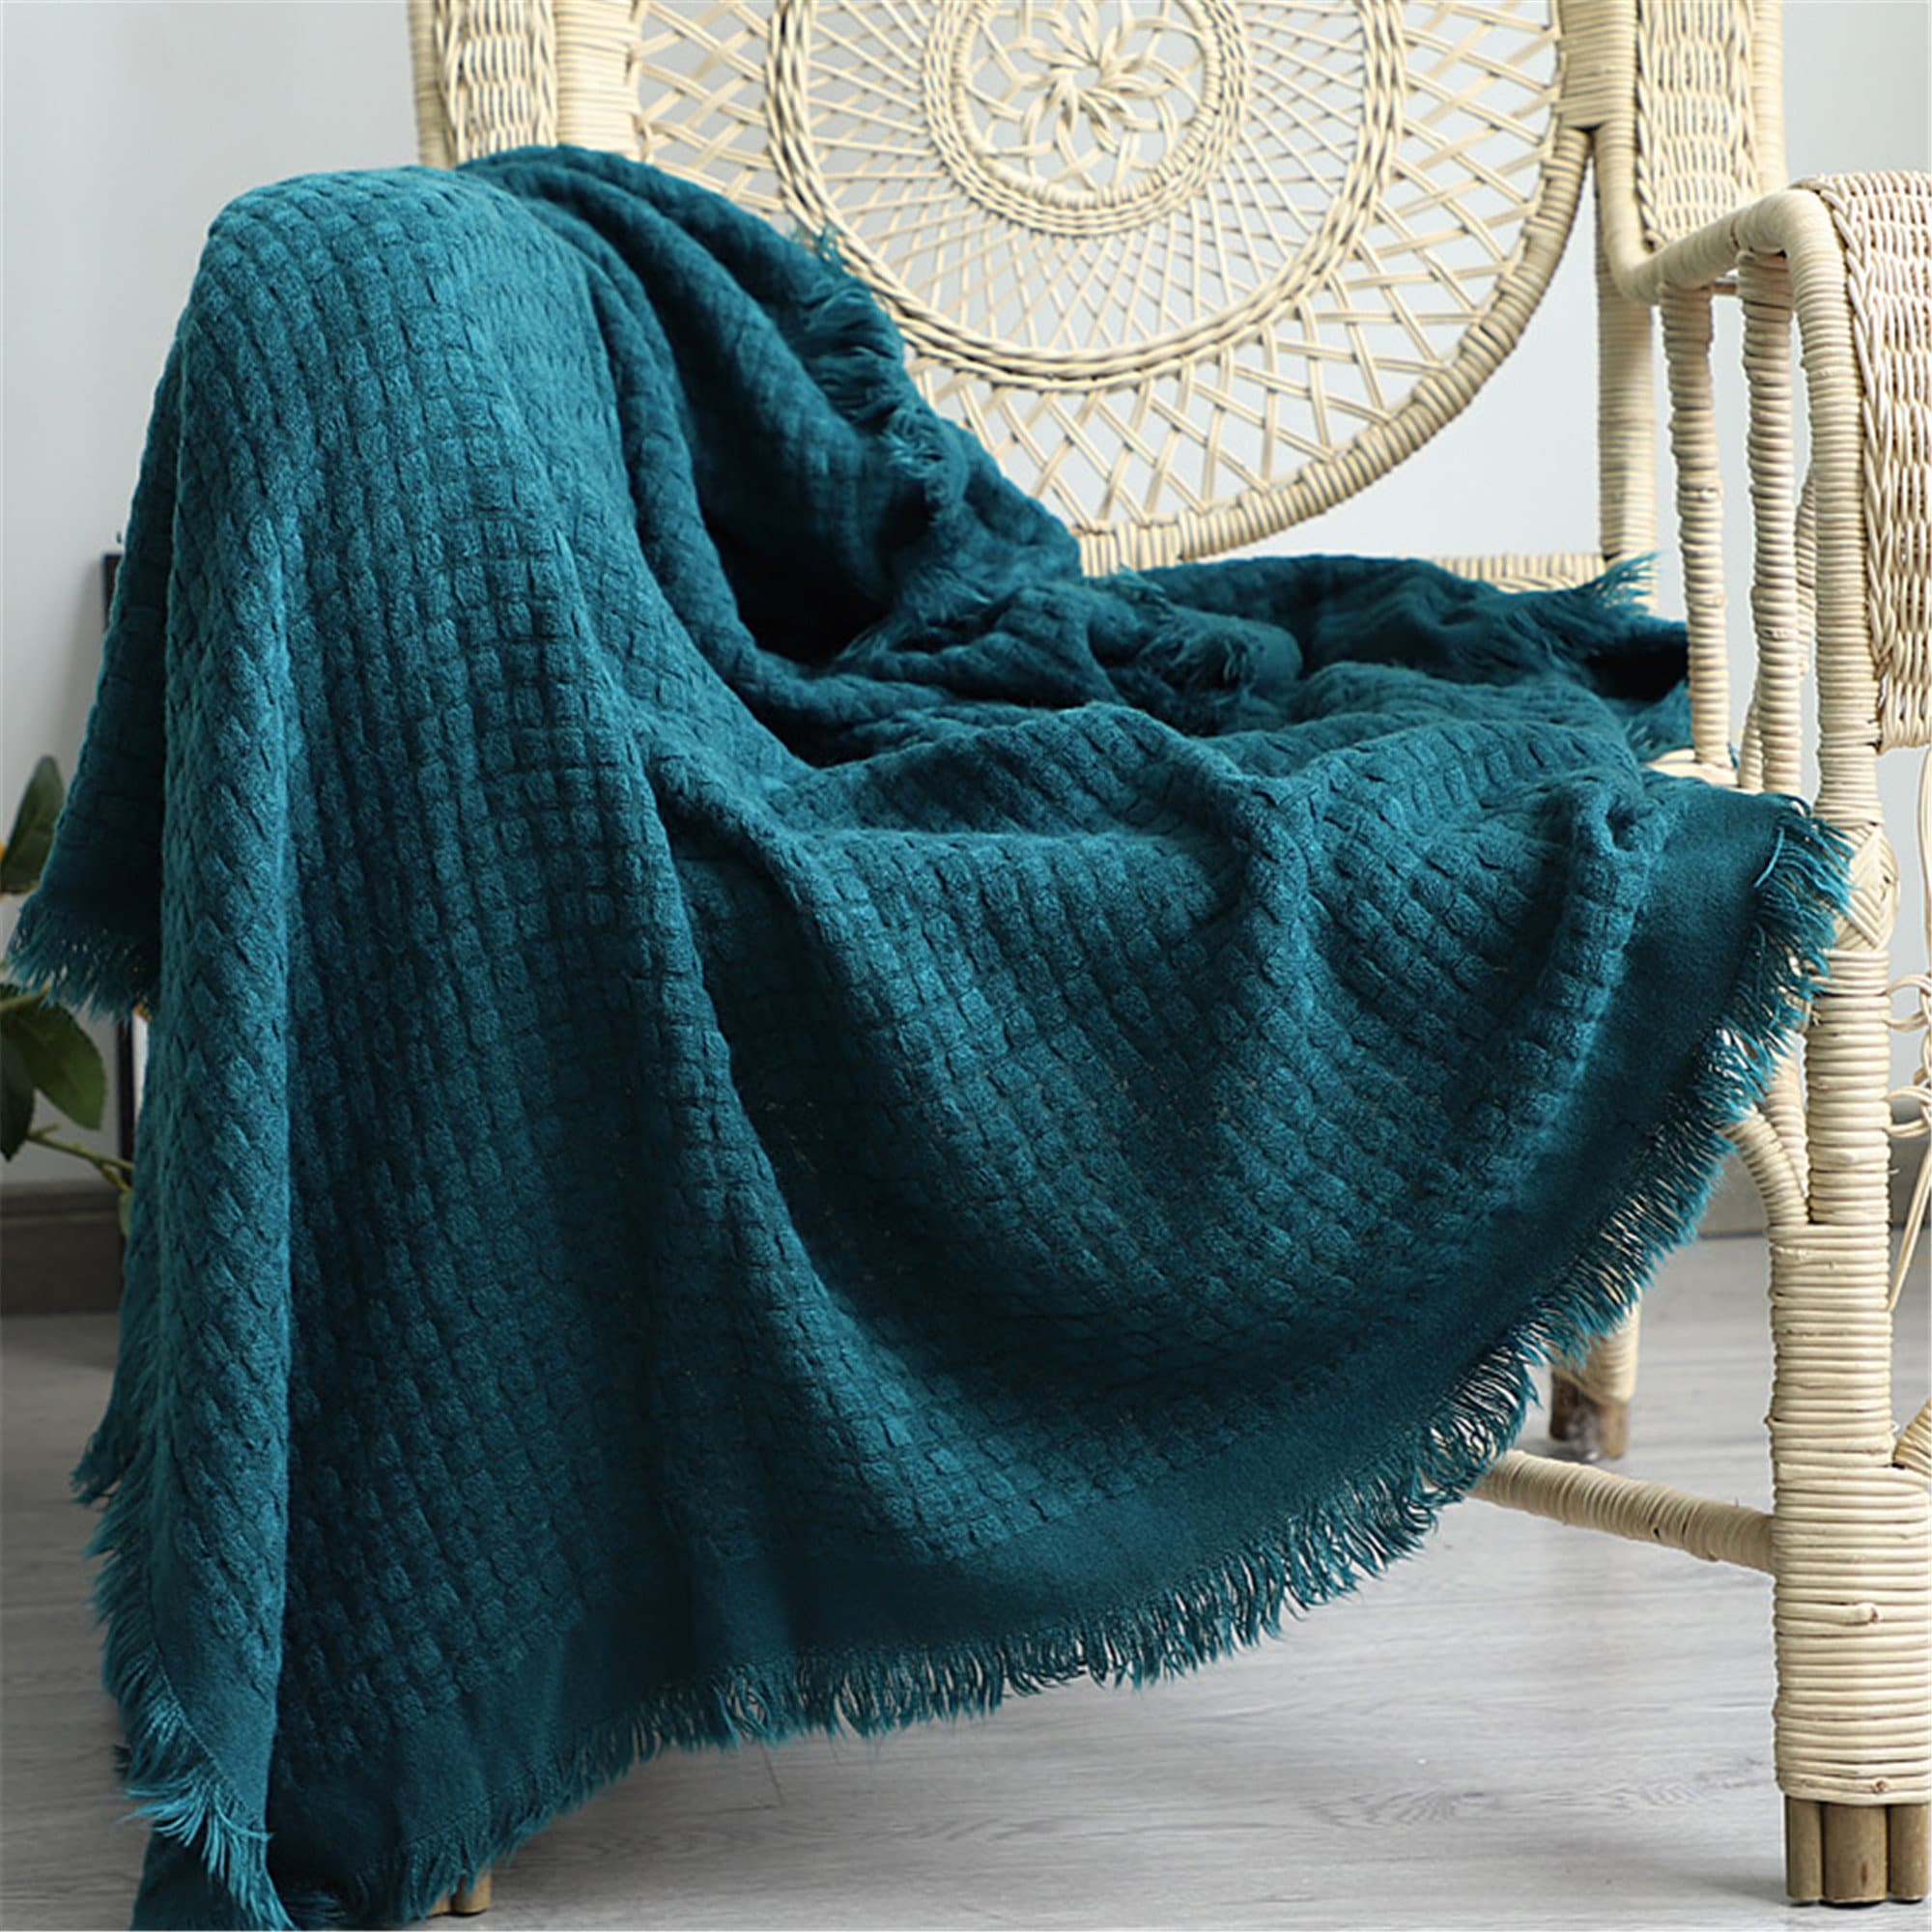 Peacock Blue Throw Blanket INS Morandi Color Blanket Knitted | Etsy